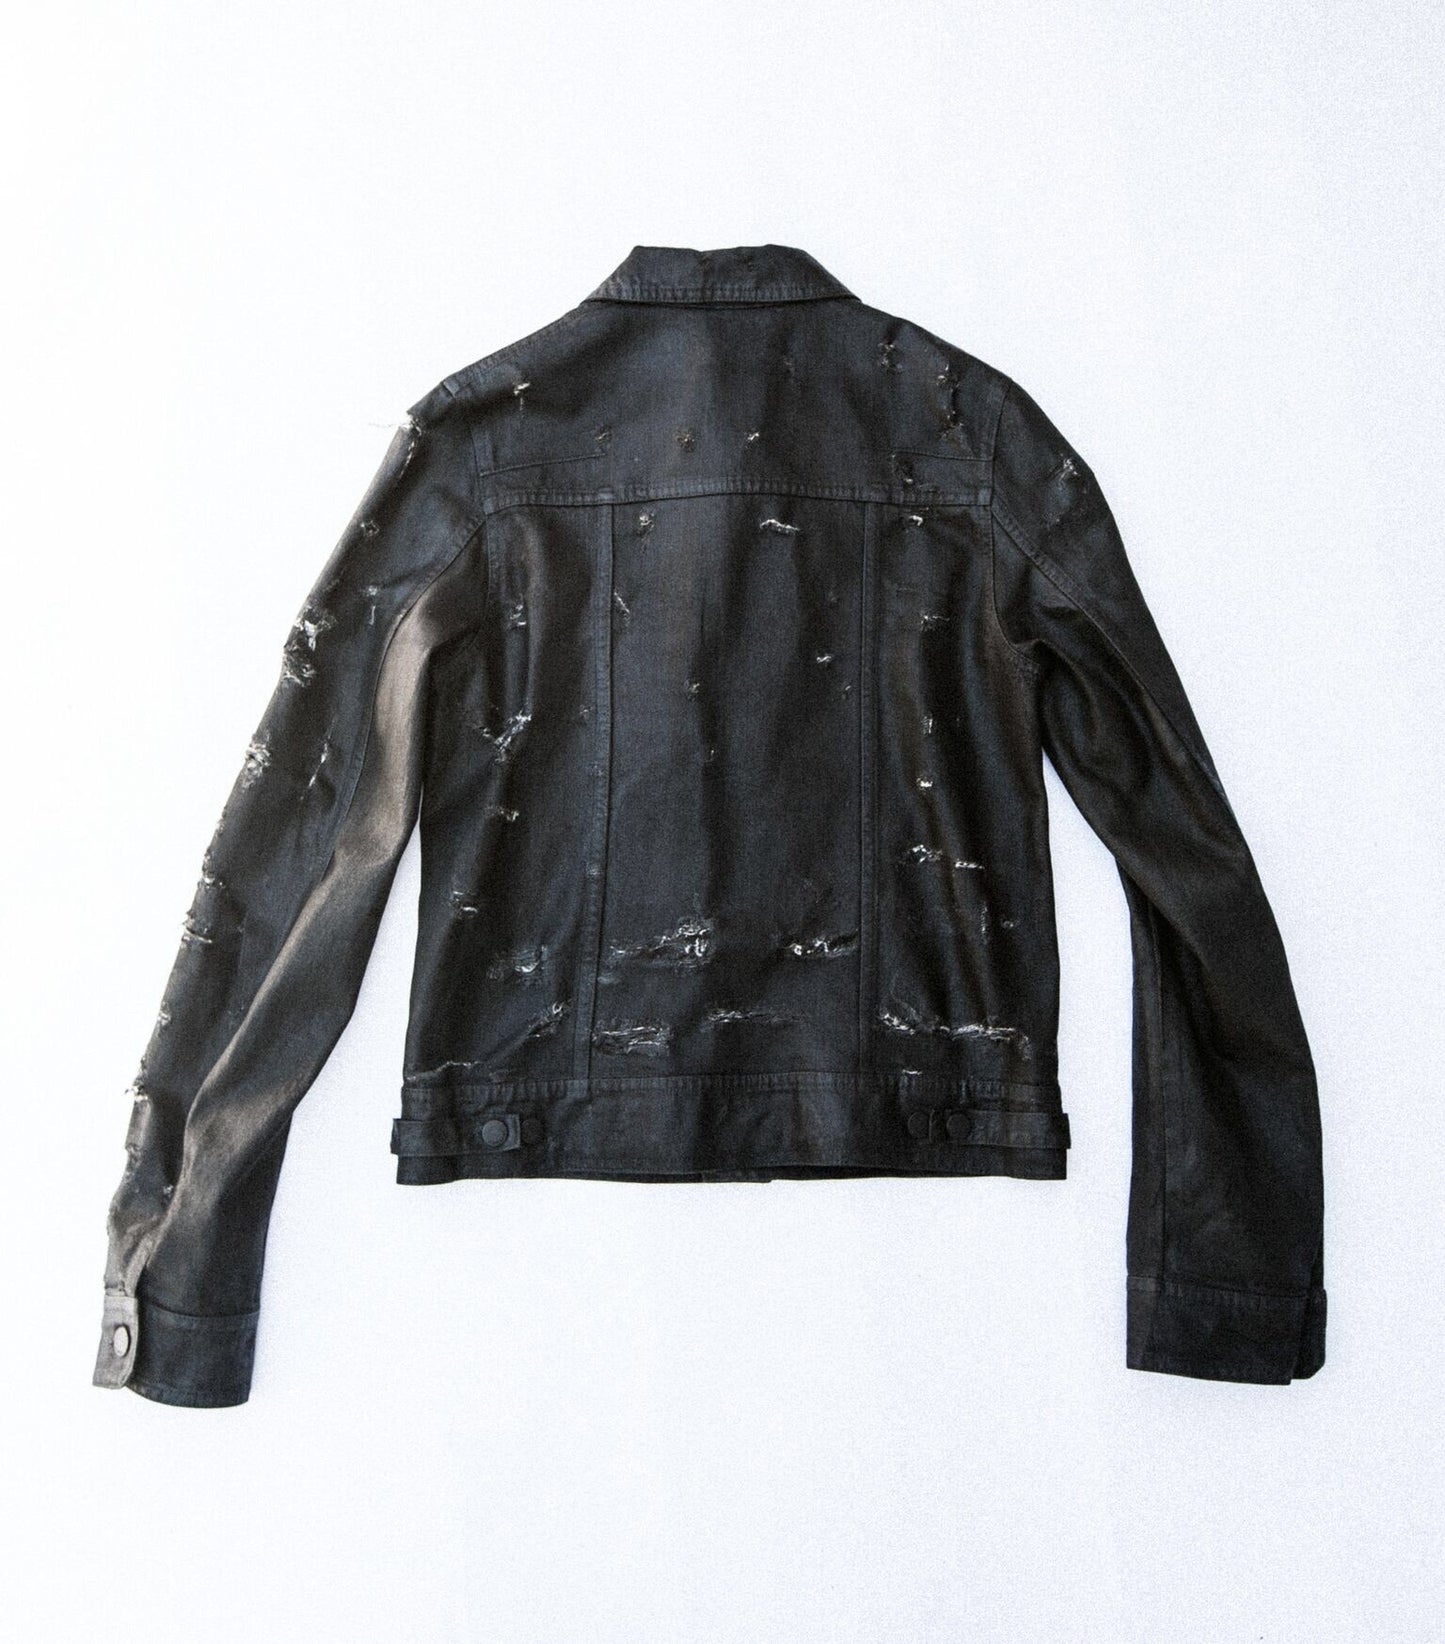 INQUIRE Dior homme Waxed Coated Denim Jacket S/S 2004 "strip" Medium